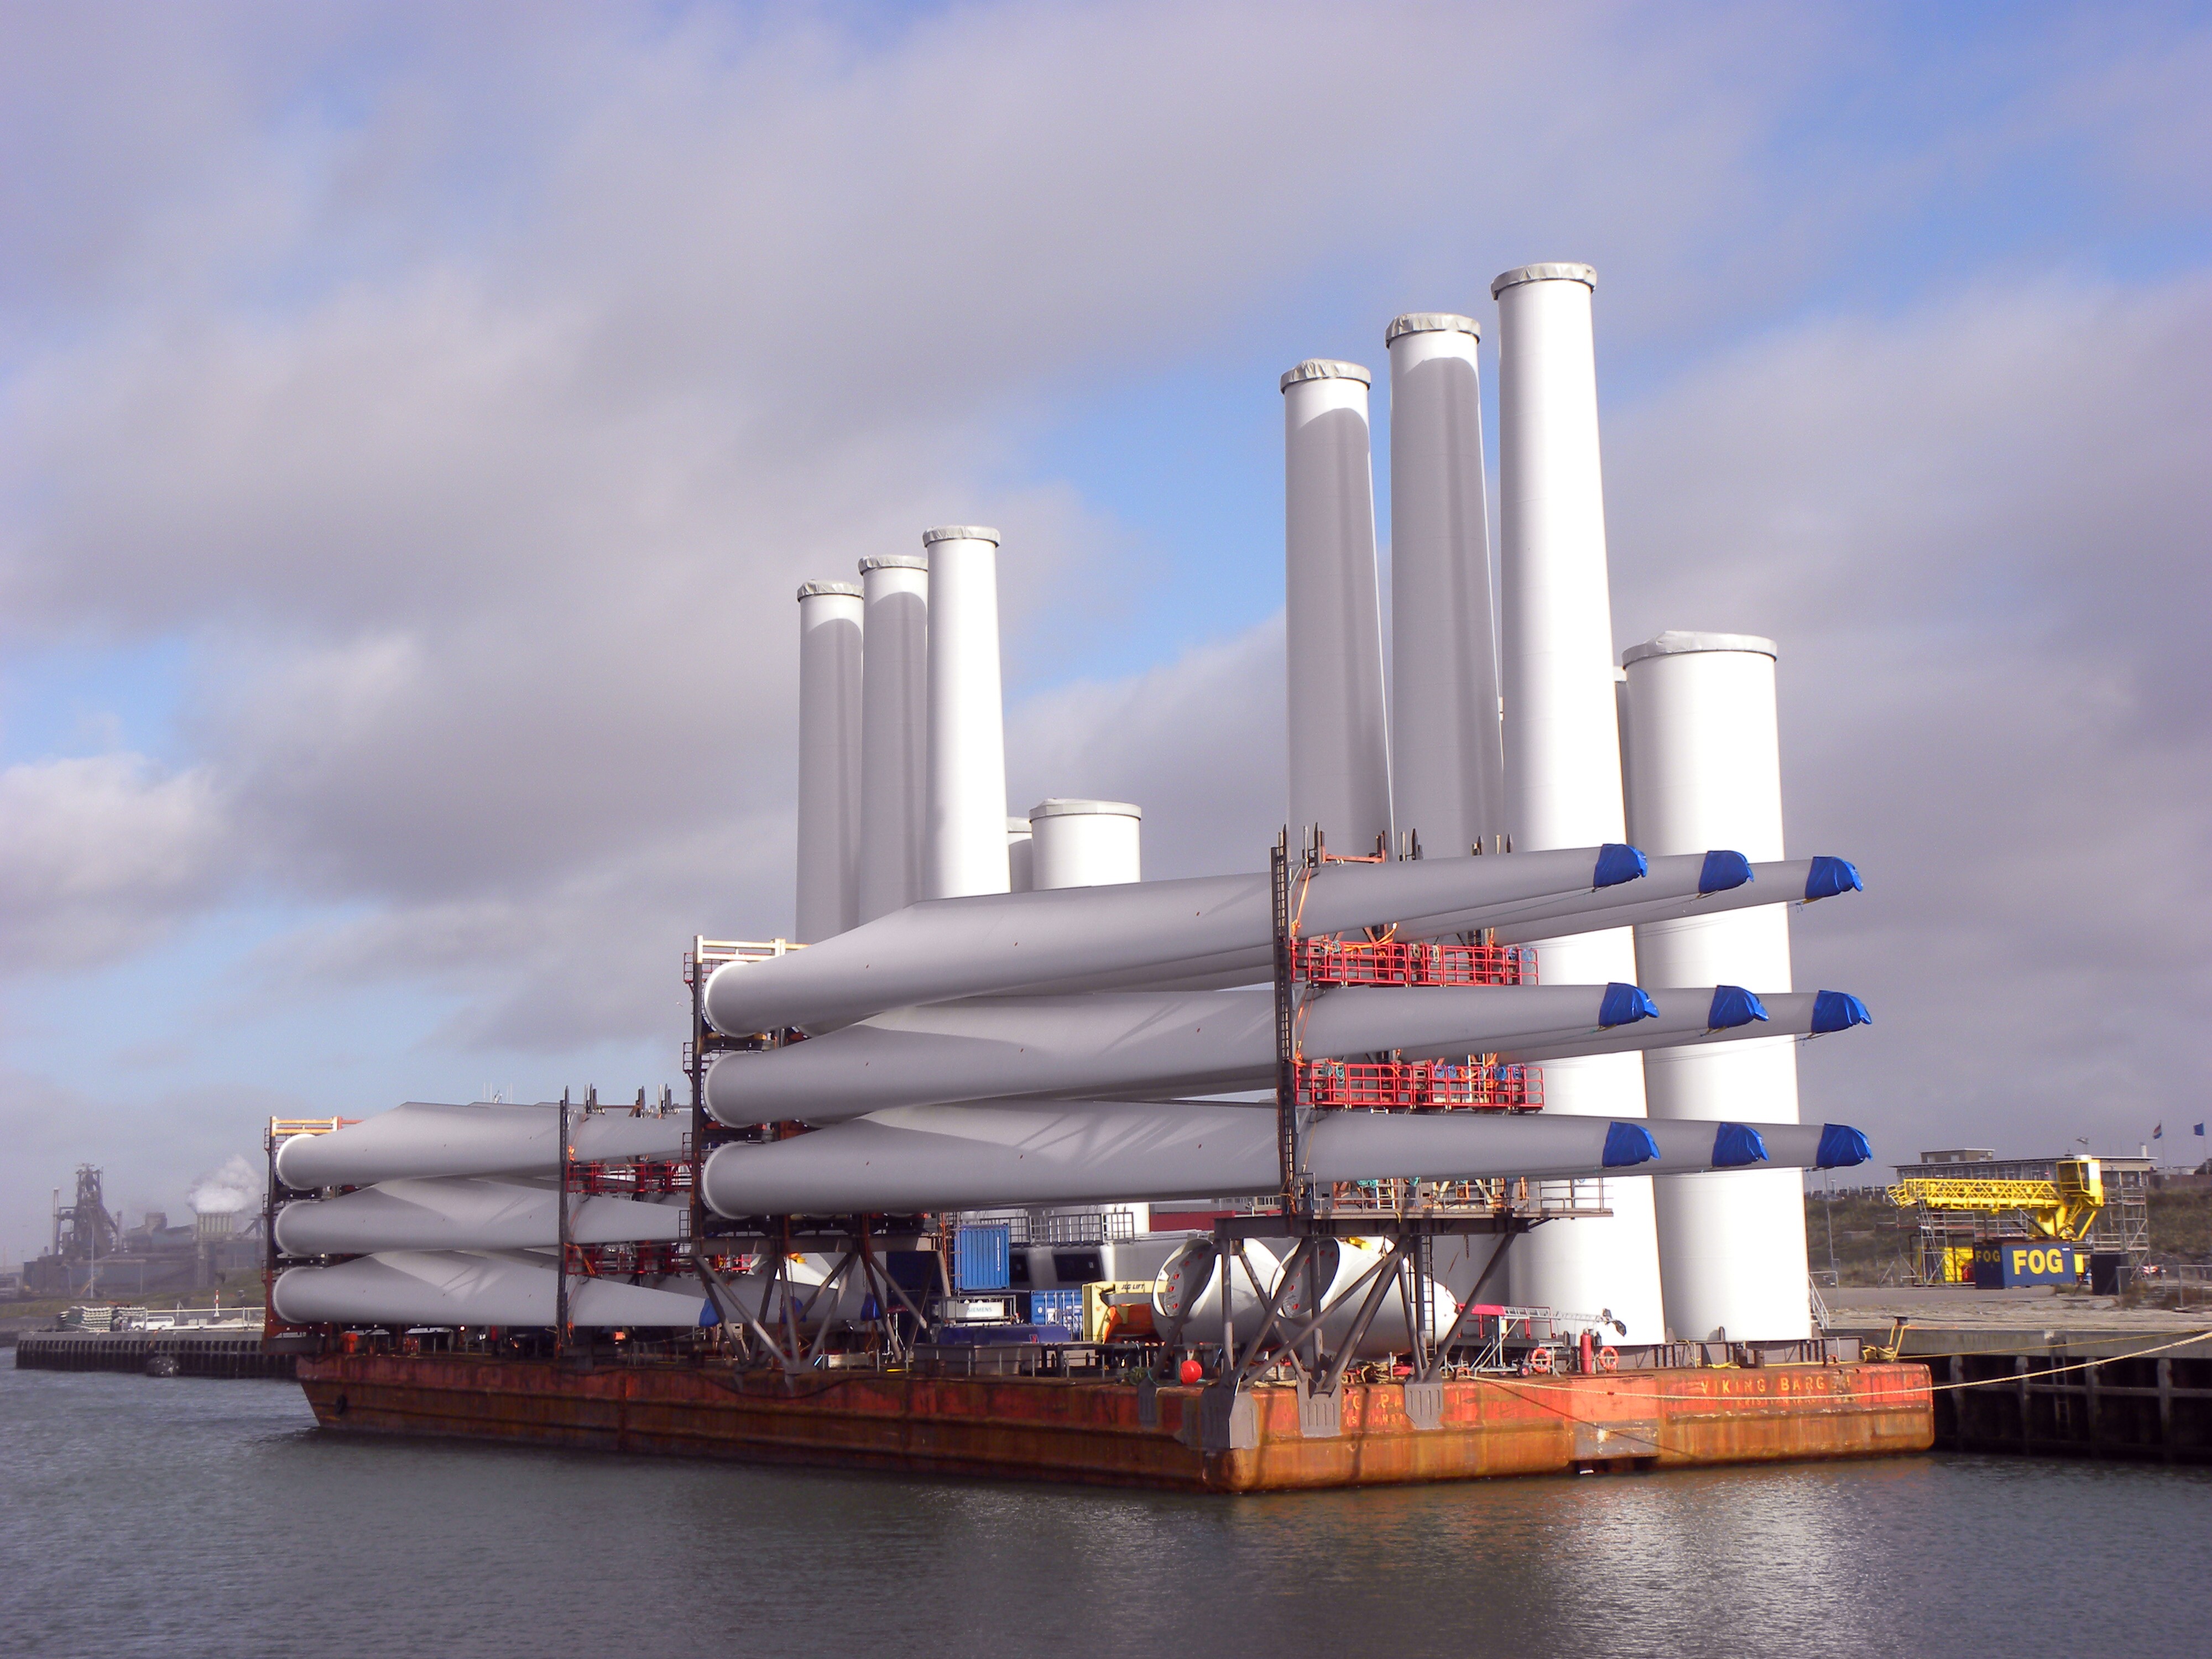 Wind turbines on a barge